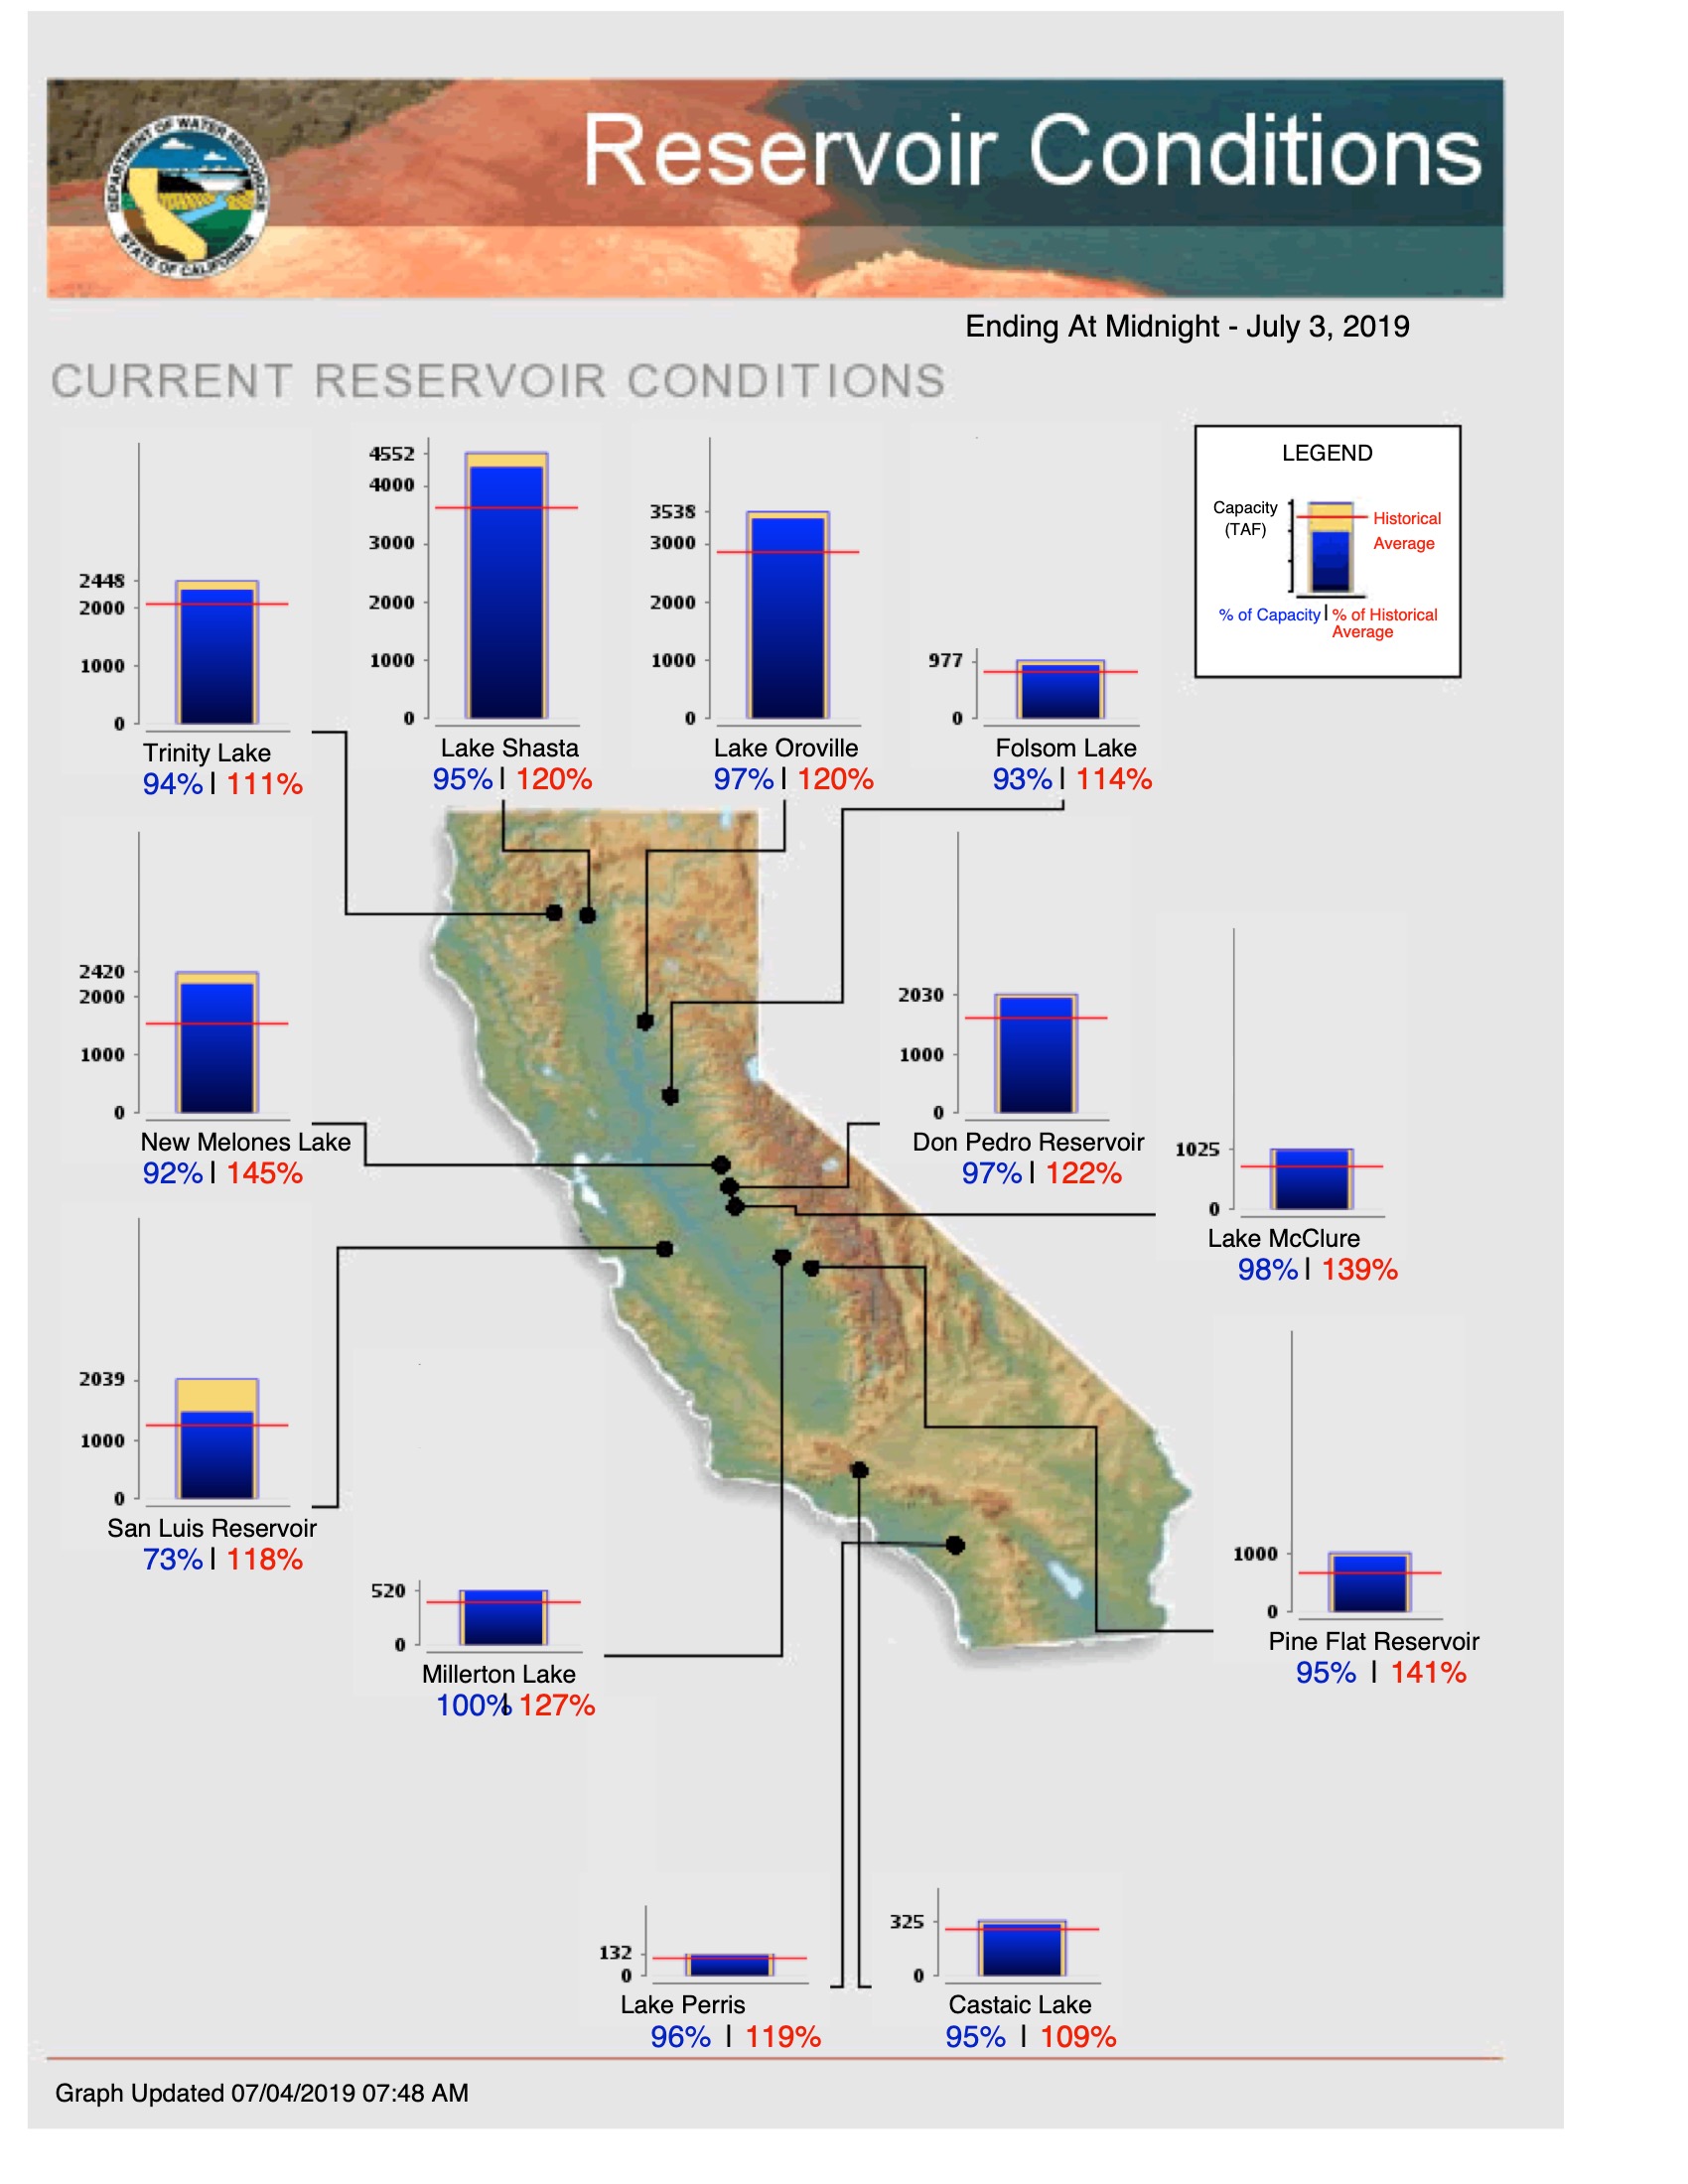 California Reservoir Levels Chart